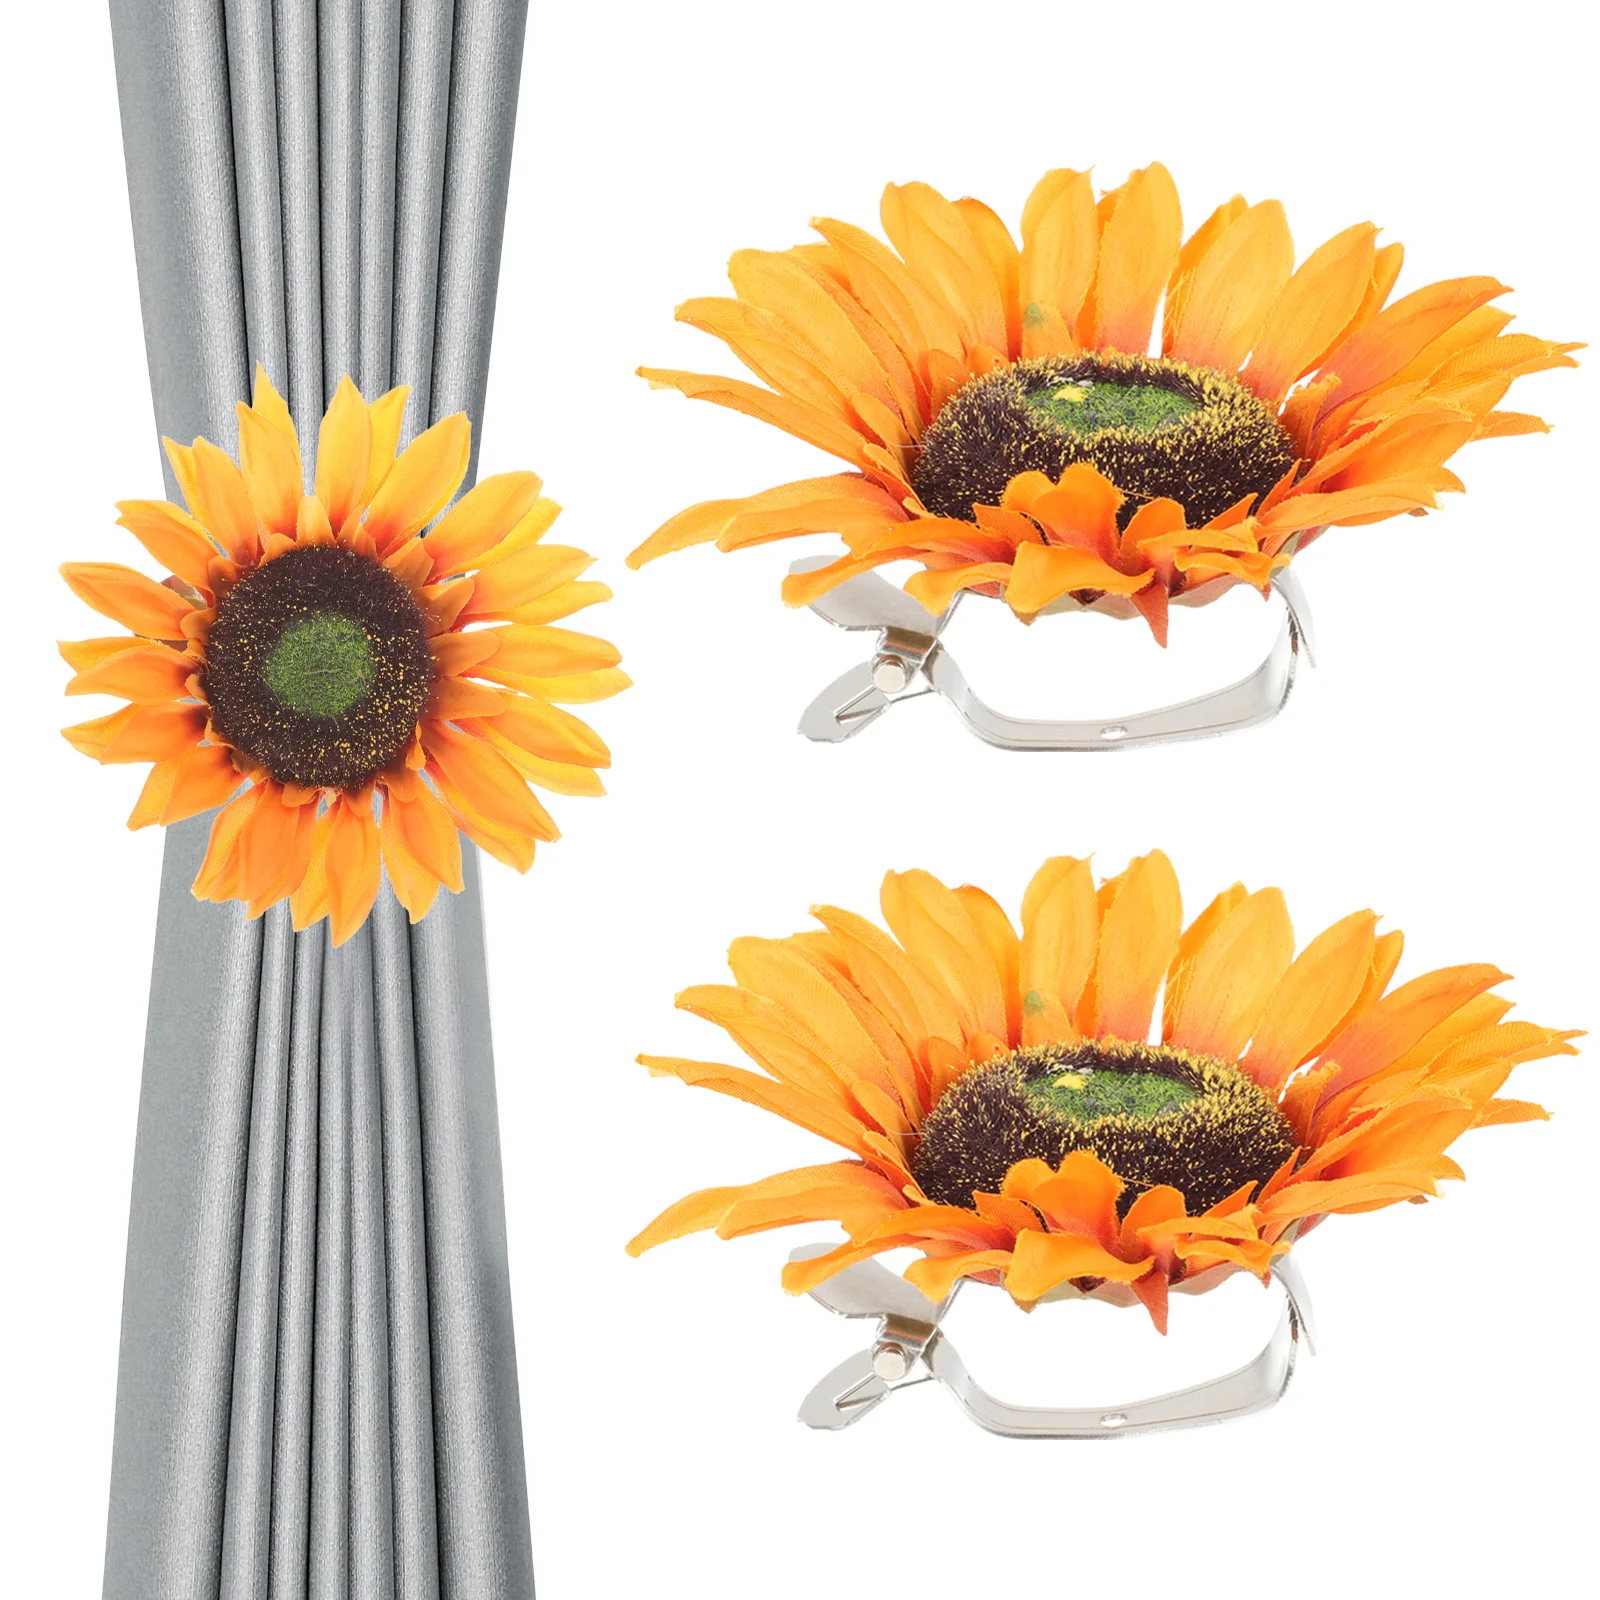 

Curtain Holdbacks Flower Sunflower Tiebacks Clips Tie Window Clamp Clip Backs Drapes Drapery Holder Binding Drape Straps Tieback